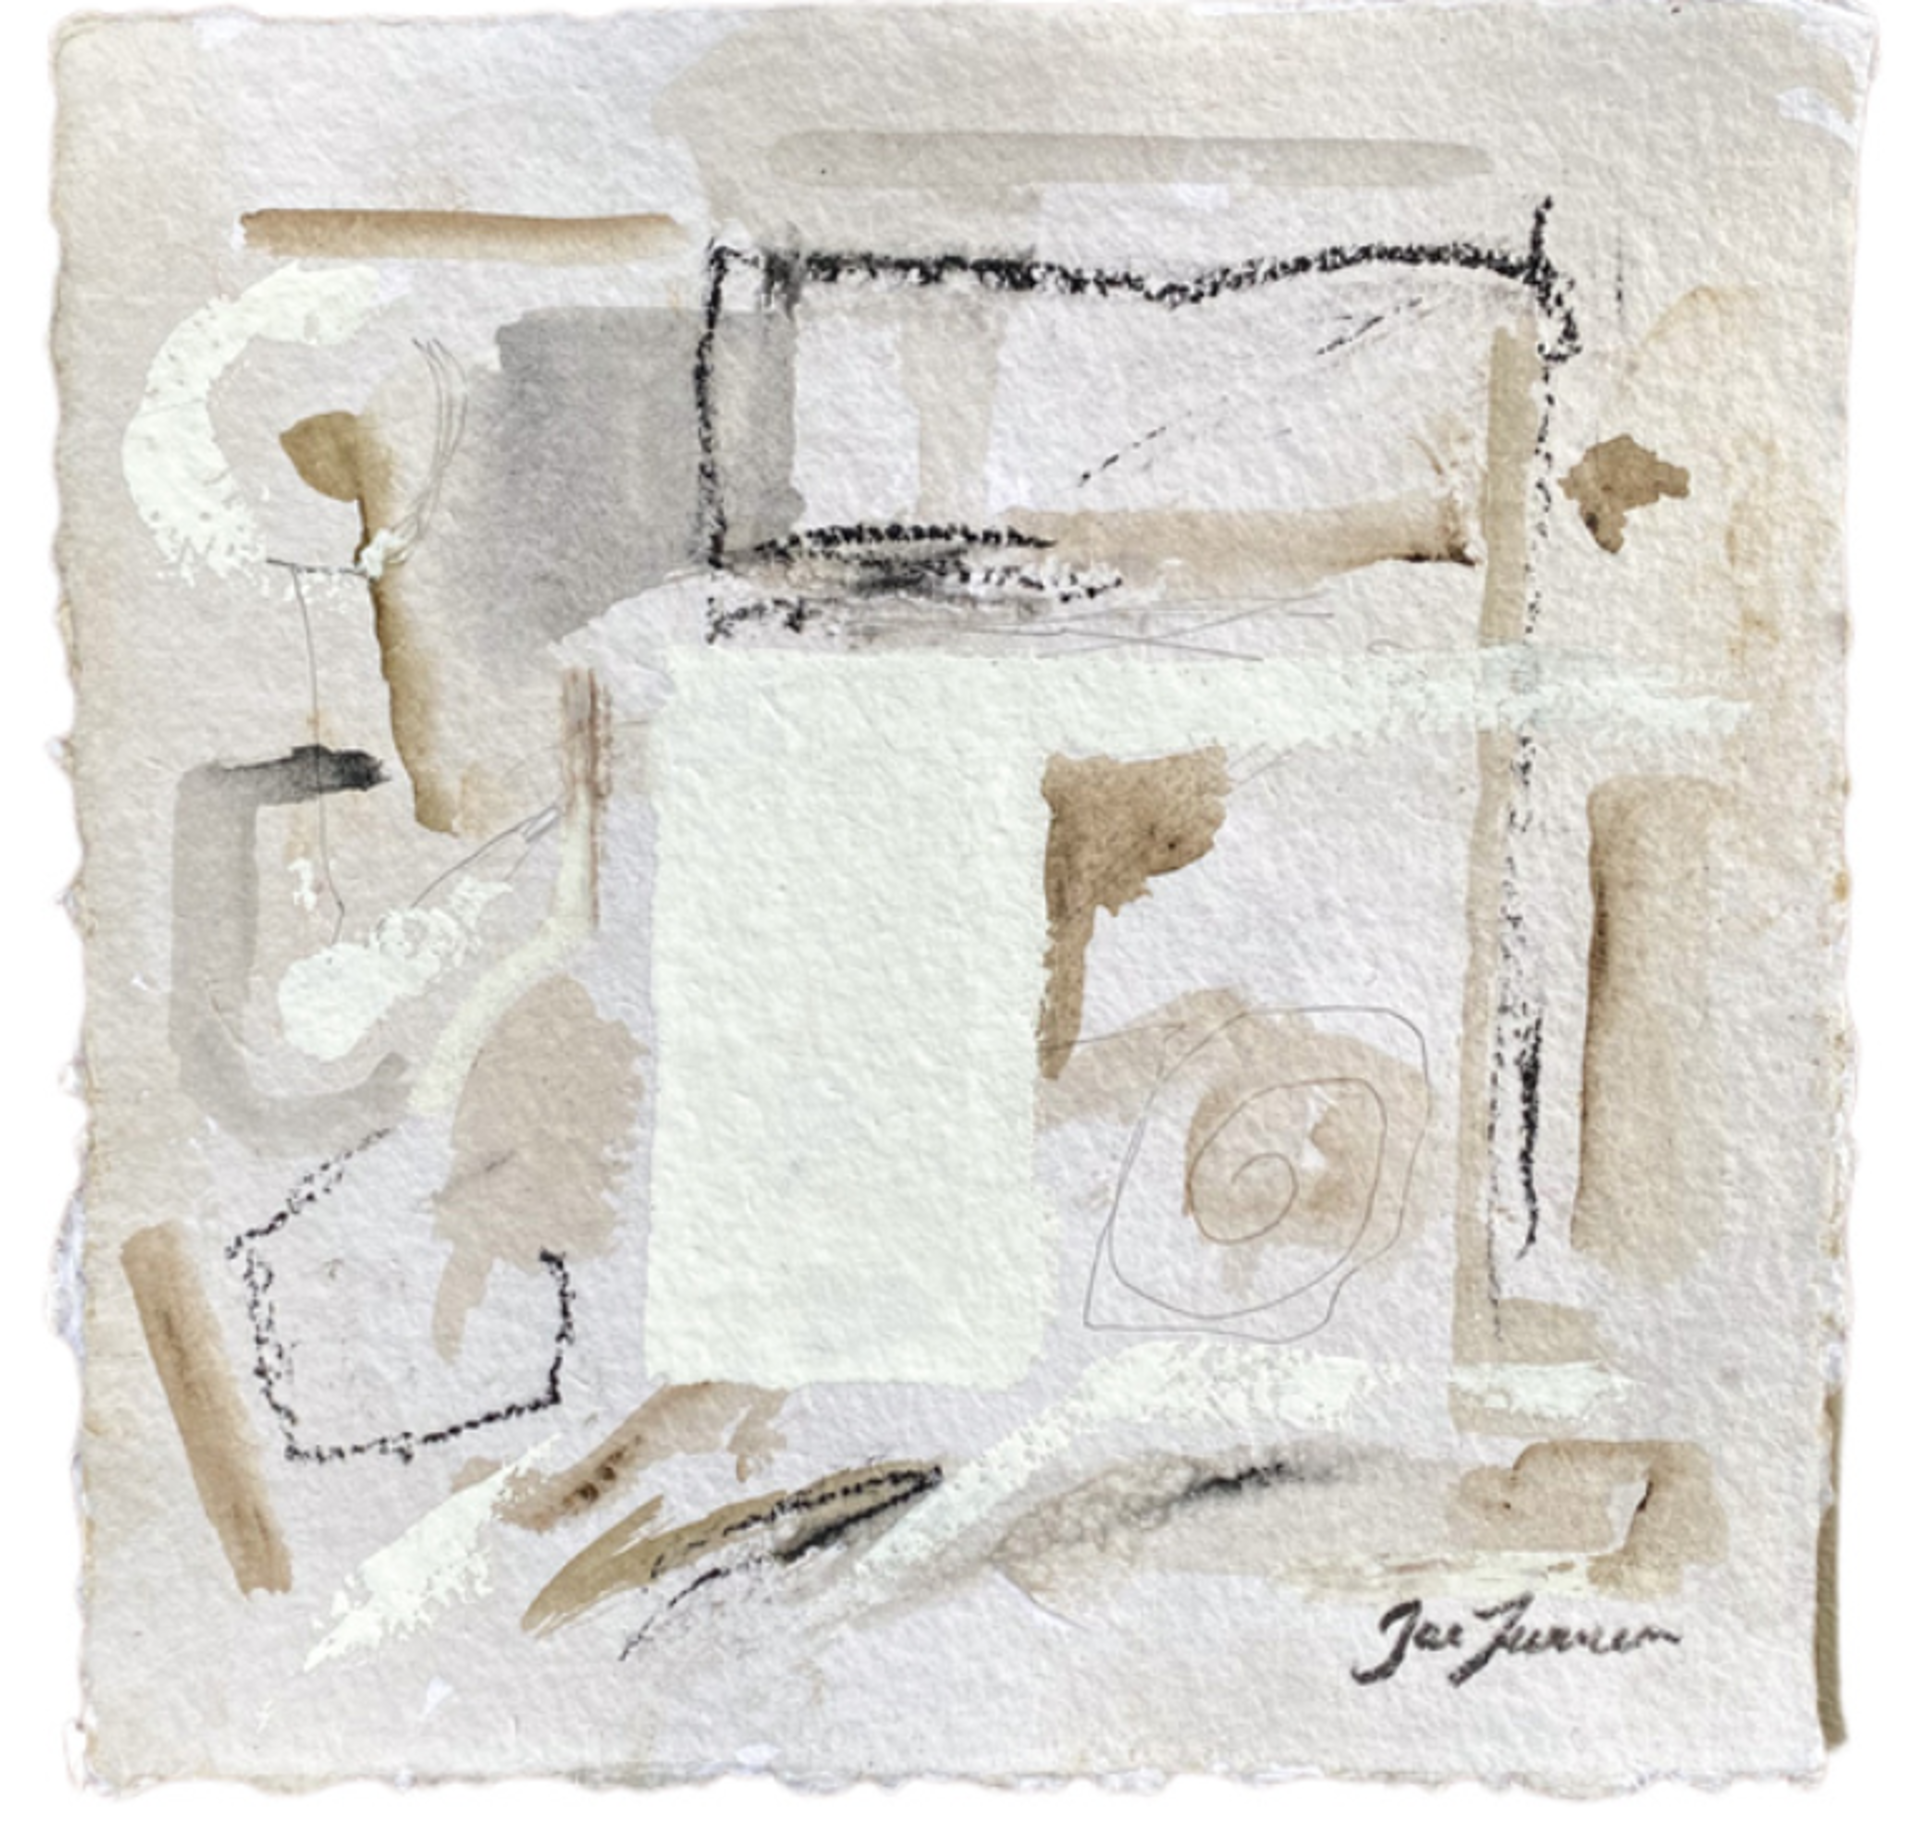 Joe Turner Deckled (12 x 12) Paper Piece No. 4 by Joe Turner